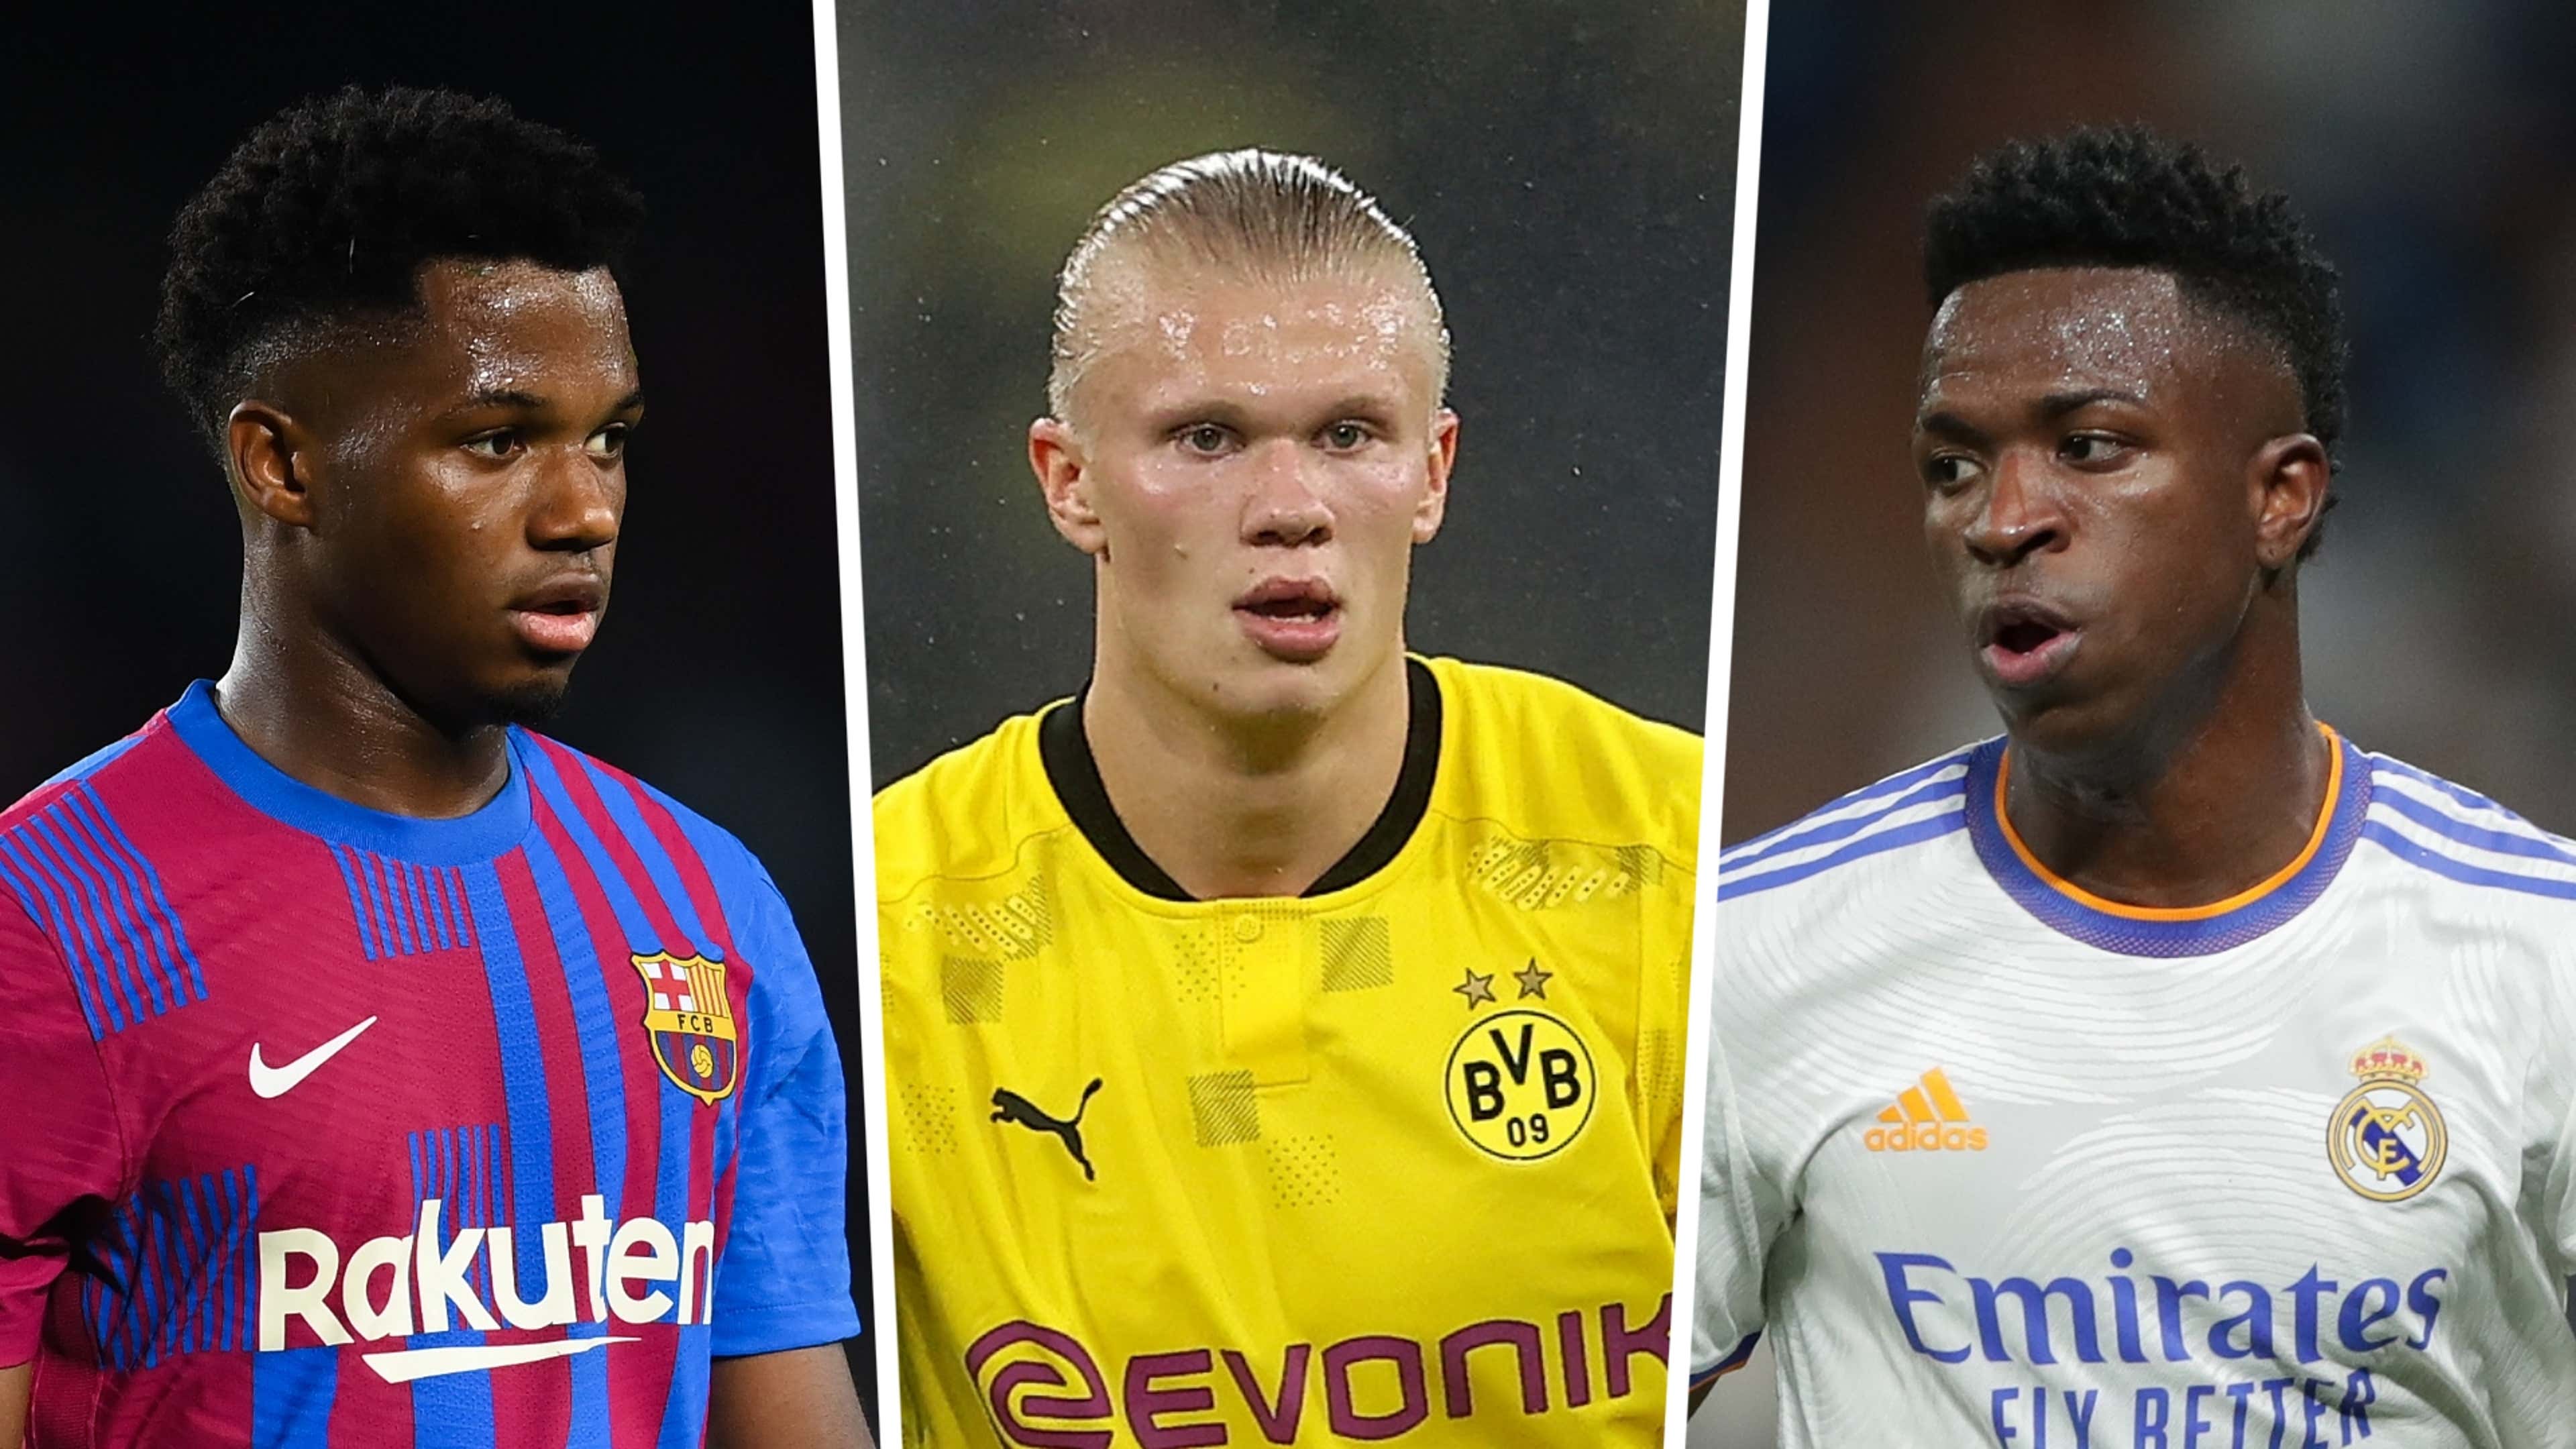 FIFA 22 best young midfielders: The top 50 MIDs on career mode